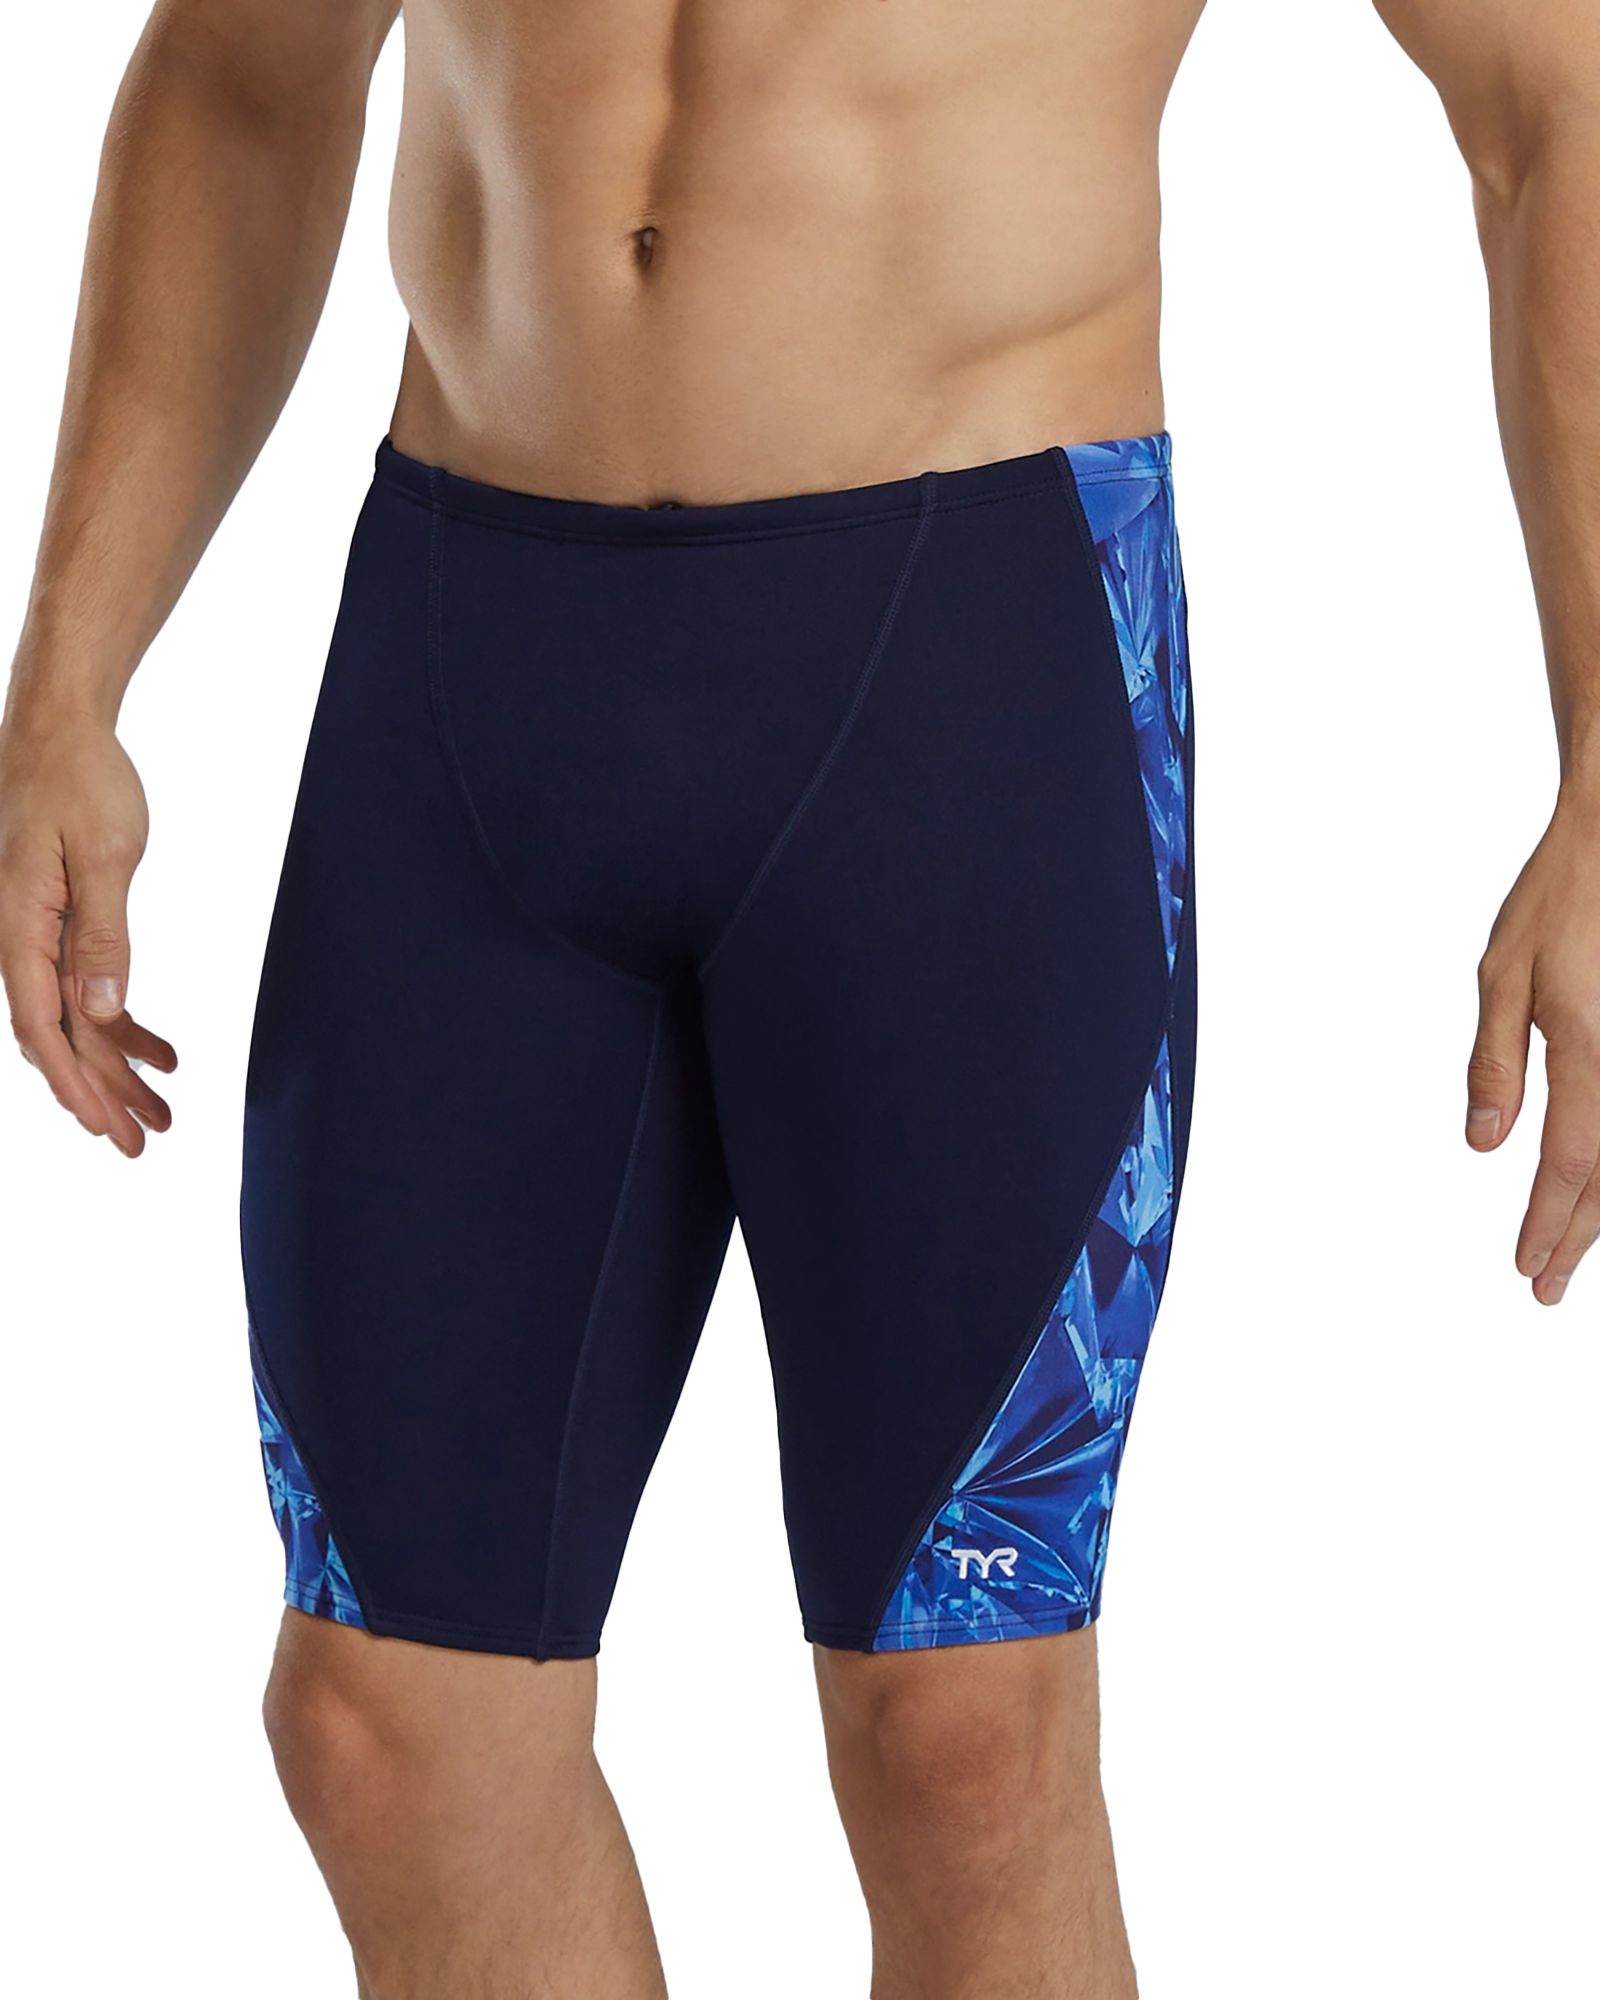 Photos - Swimwear TYR Men's Durafast Eliste Crystalized Jammer Swimsuit, Size 34, Blue 23TYR 